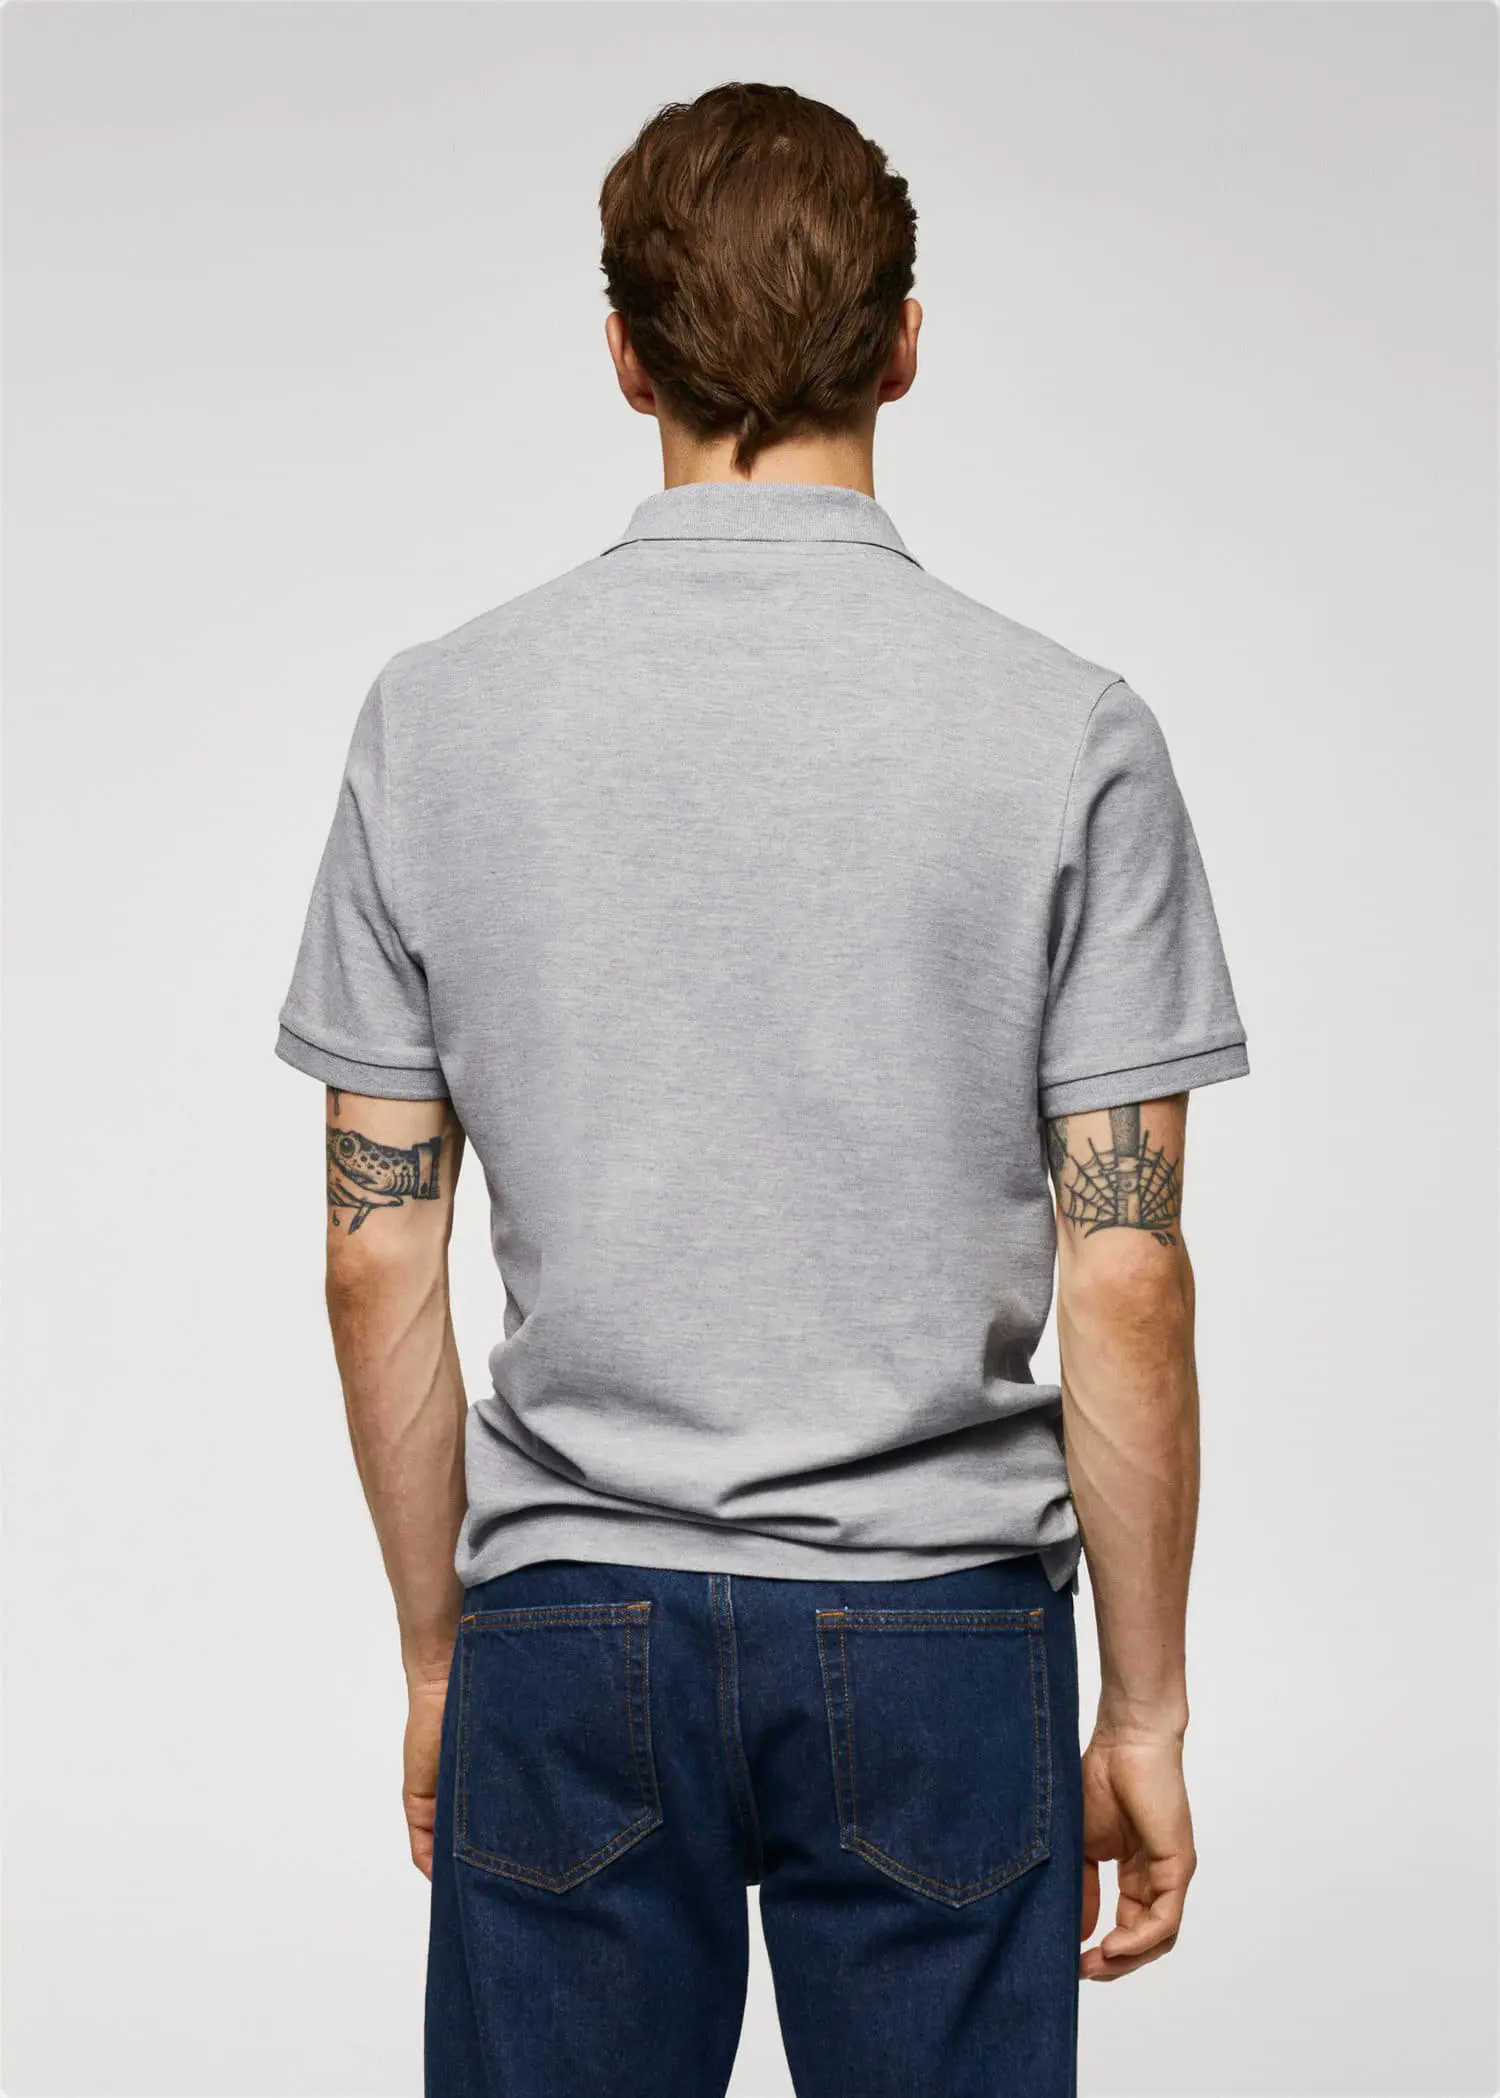 Mango 100% cotton pique polo shirt. a man wearing jeans and a gray shirt. 